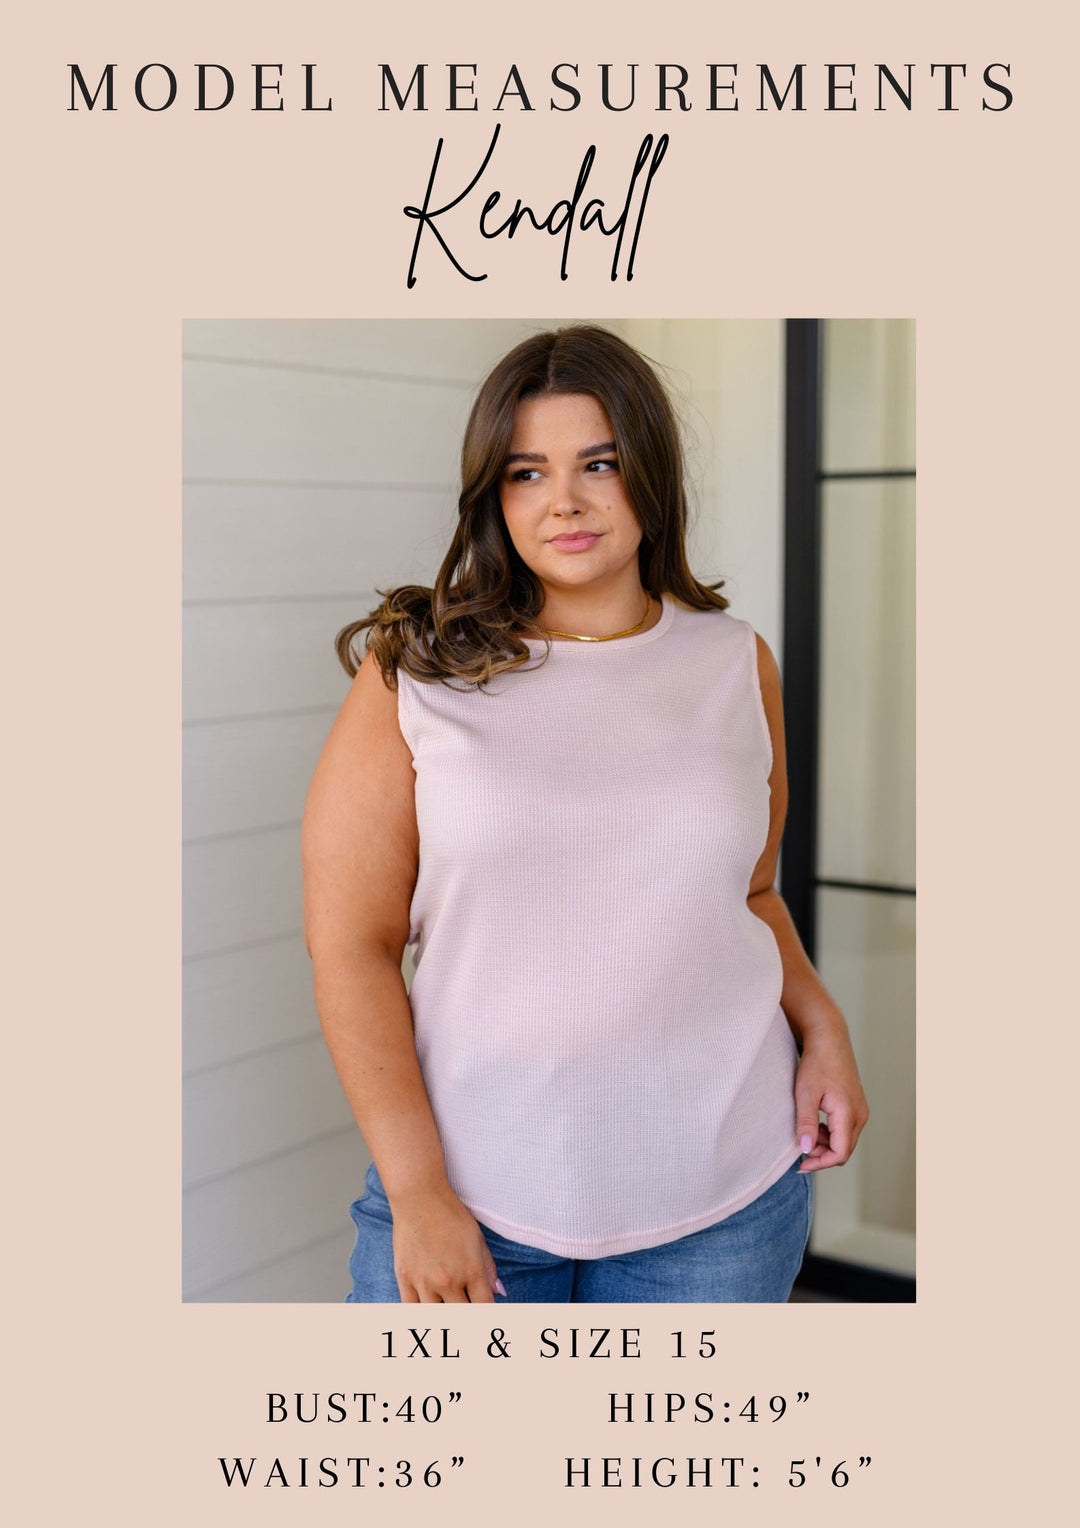 High Perspective Geometric Fleece-Jackets-Krush Kandy, Women's Online Fashion Boutique Located in Phoenix, Arizona (Scottsdale Area)